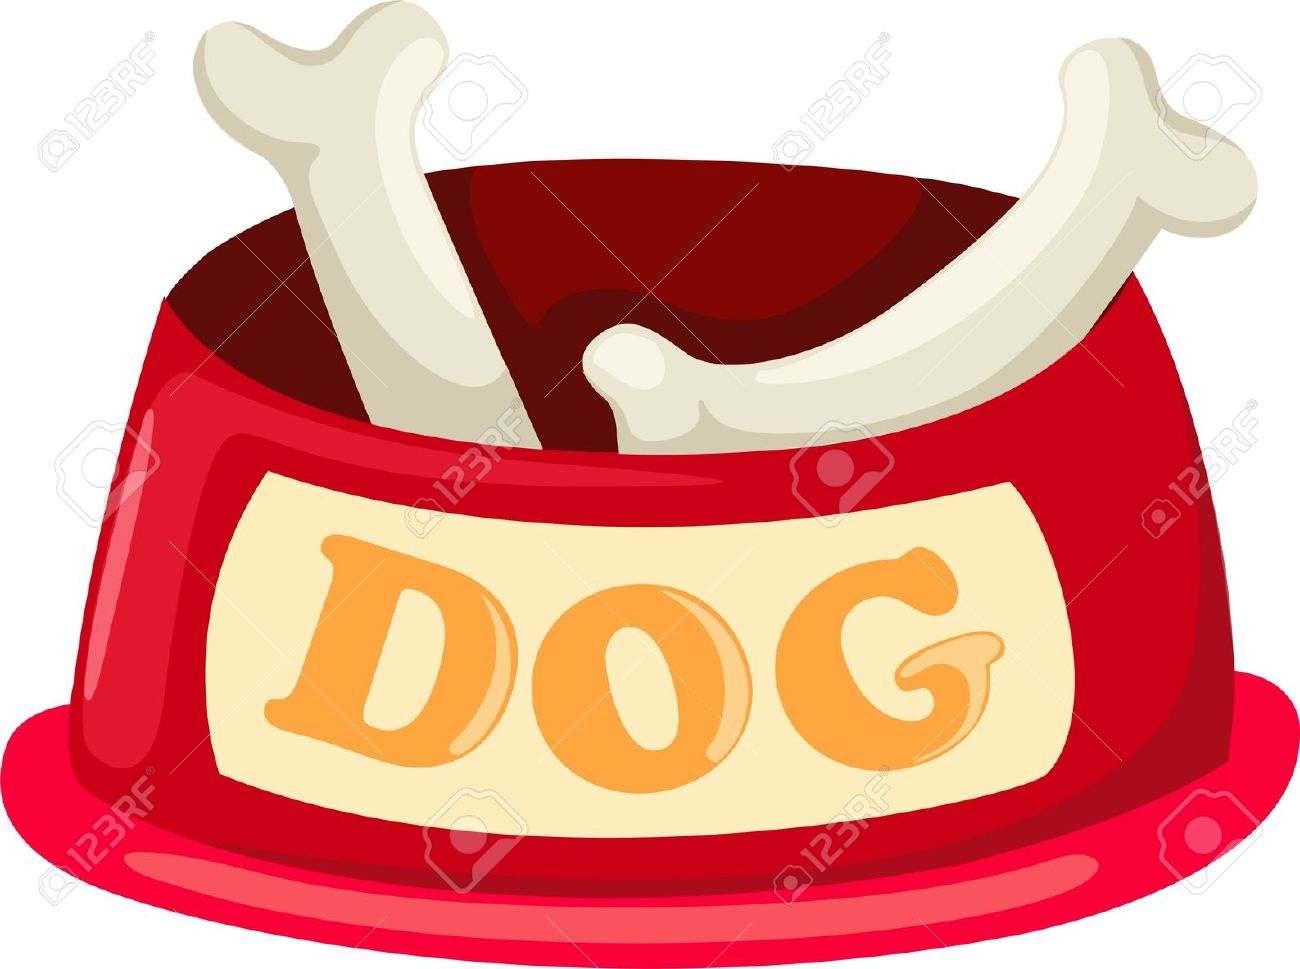 Free Dog Dish Cliparts, Download Free Clip Art, Free Clip.